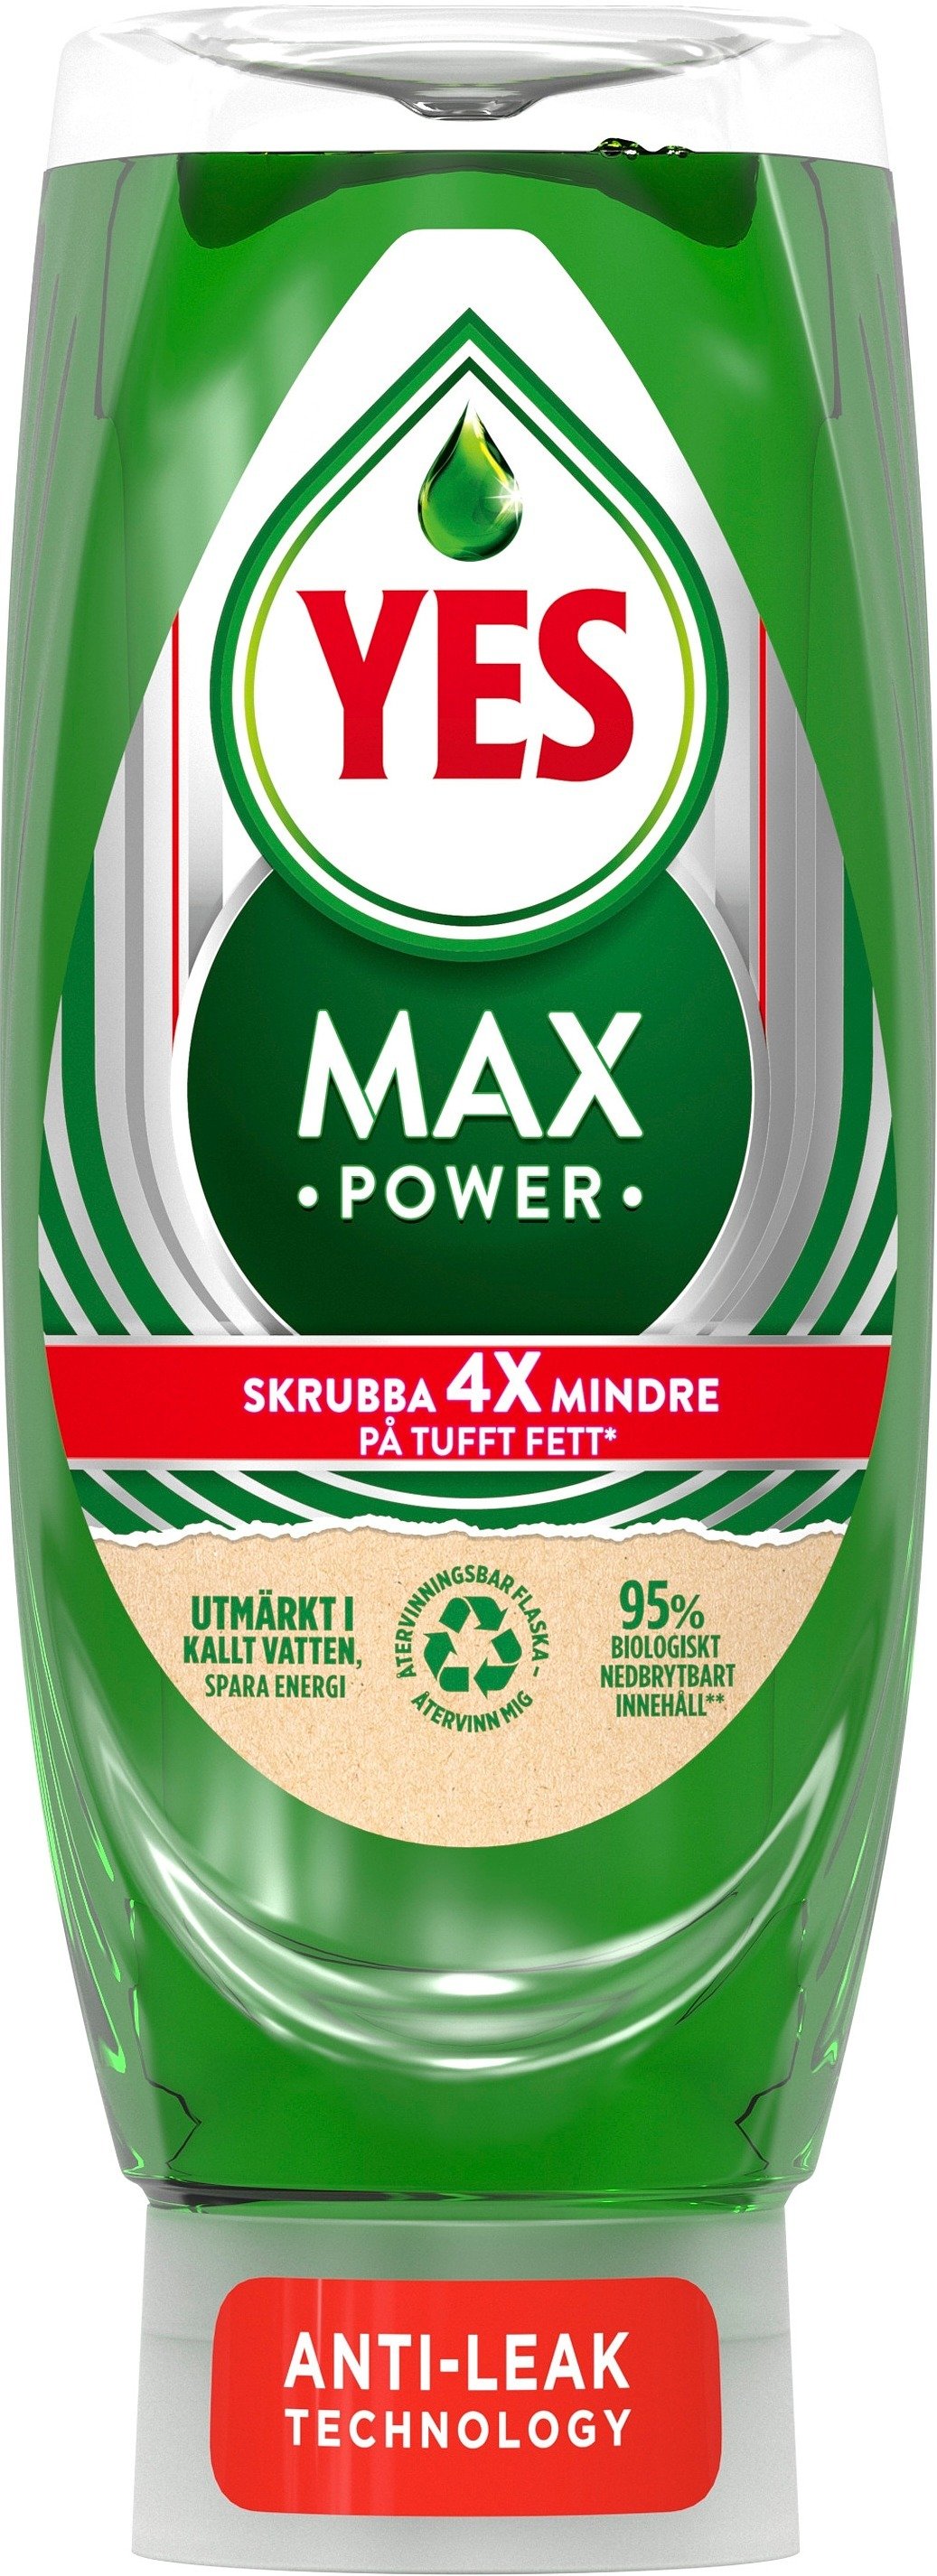 YES MaxPower Diskmedel 450 ml